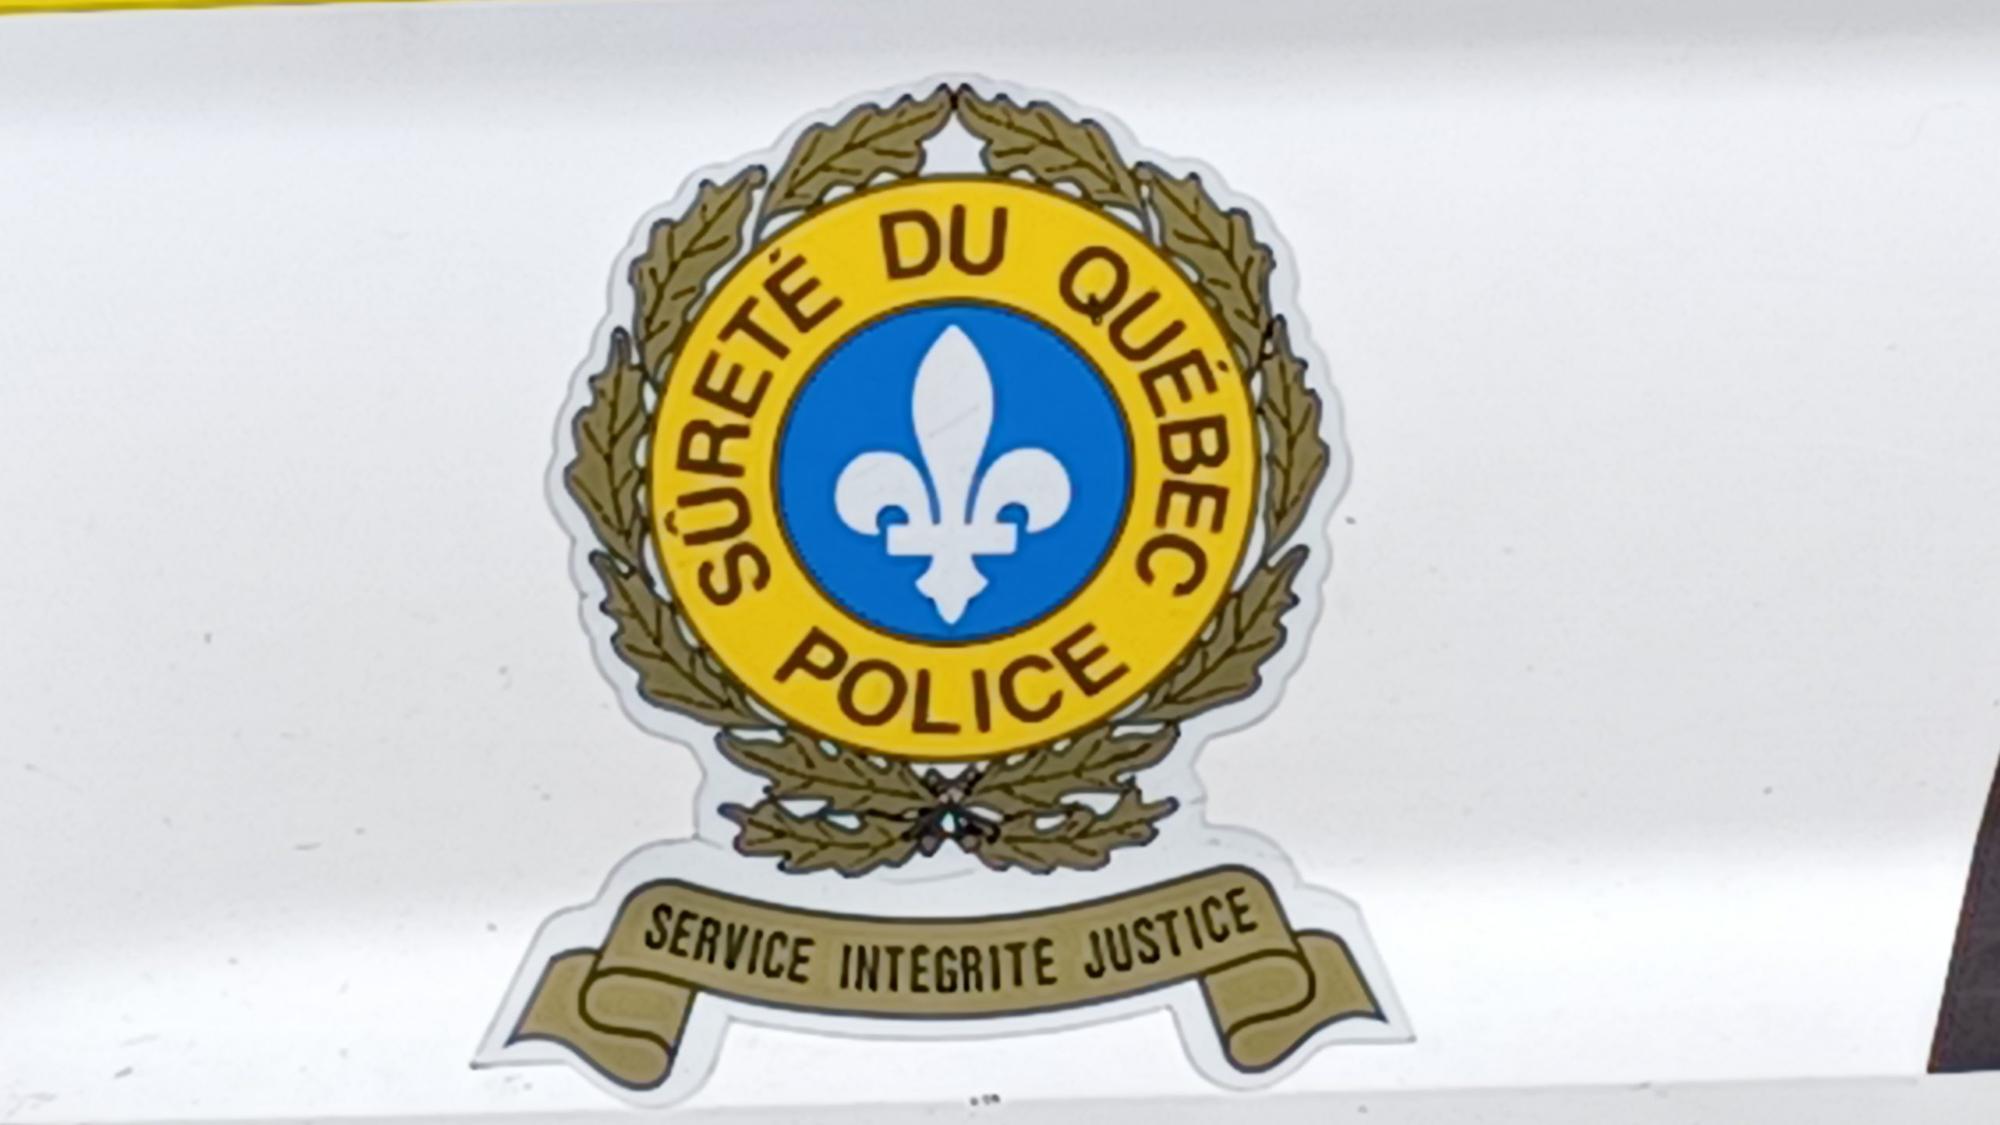 Fatalities increased on roads under Sûreté du Québec jurisdiction in 2021